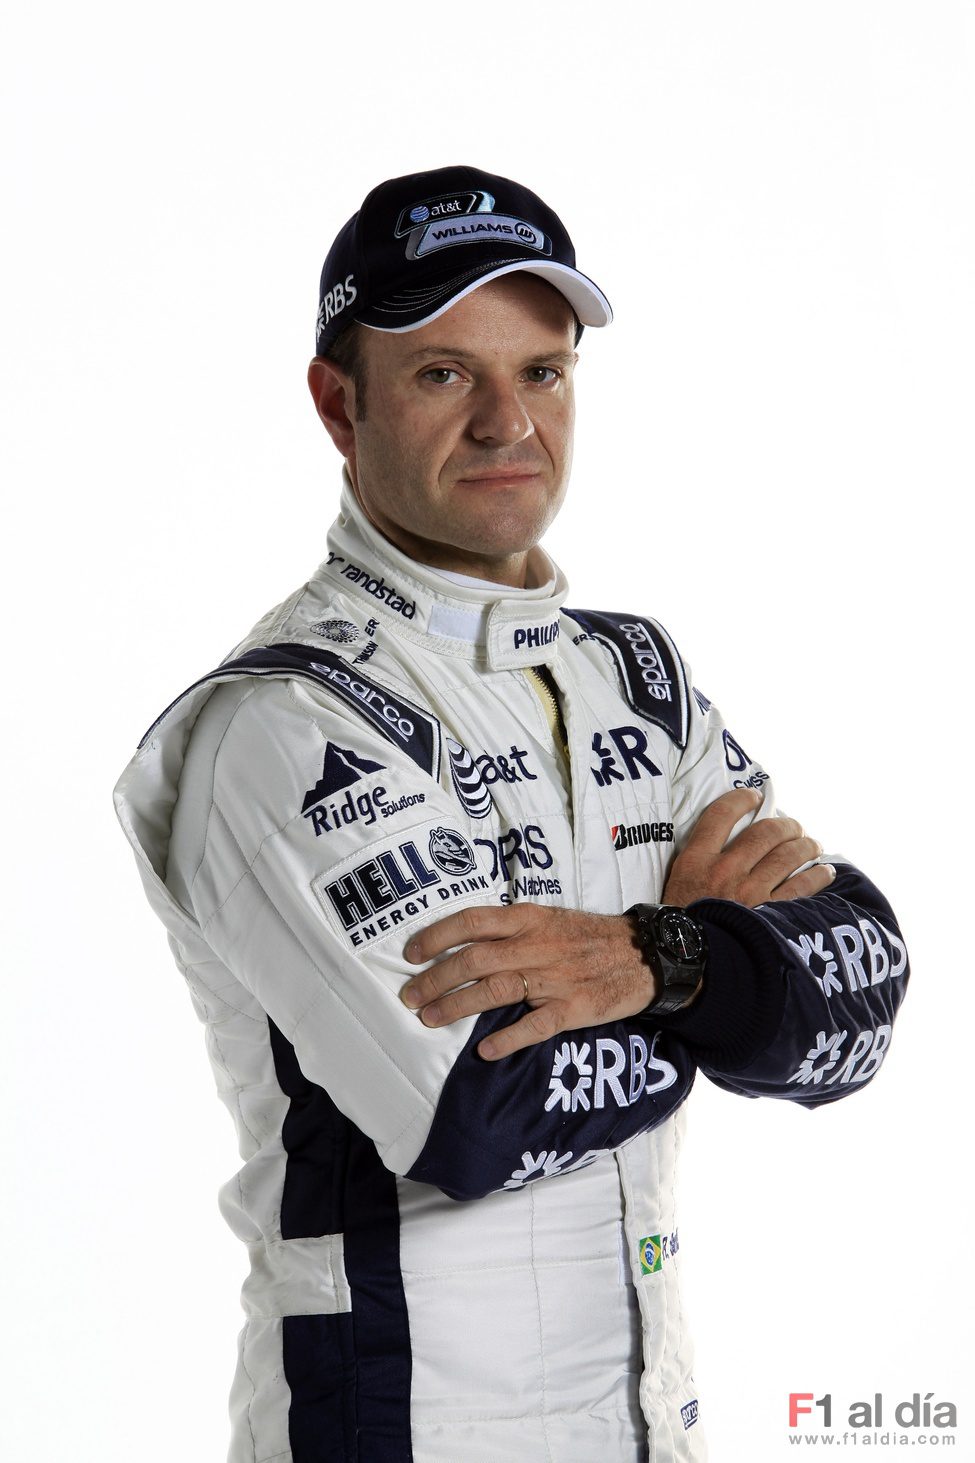 Rubens Barrichello luce sus nuevos colores